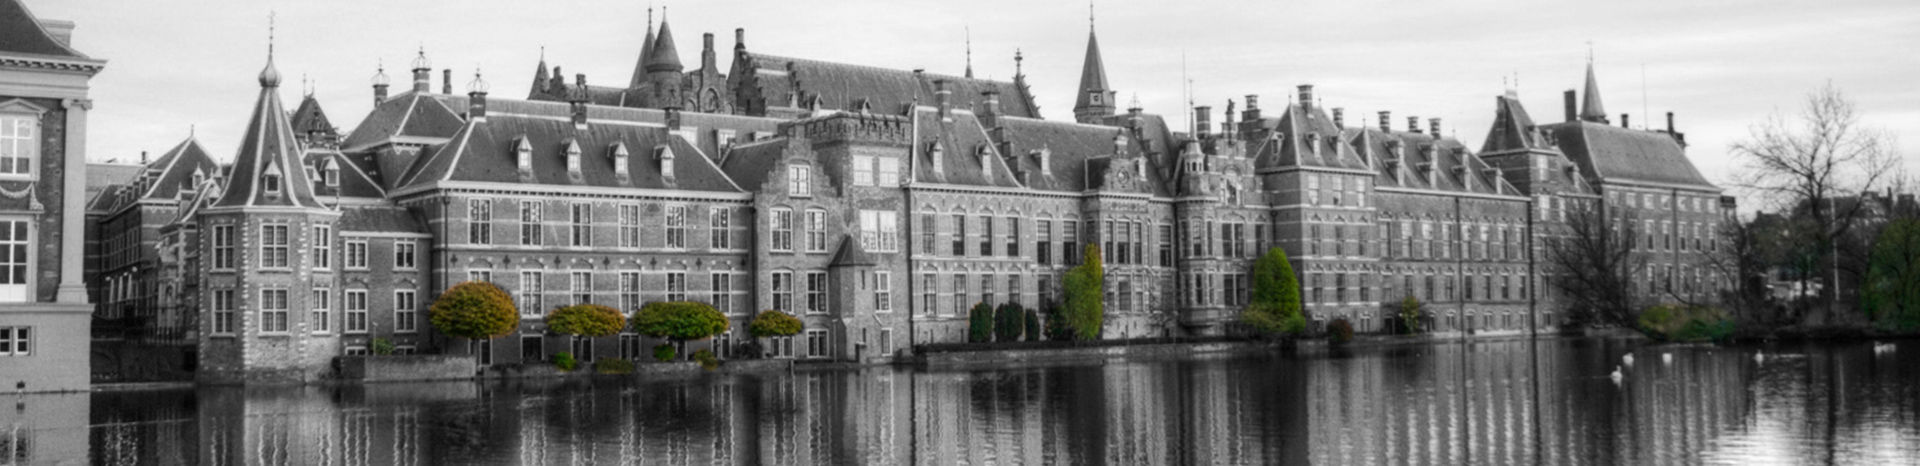 Letselschade advocaat Den Haag | LetselPro